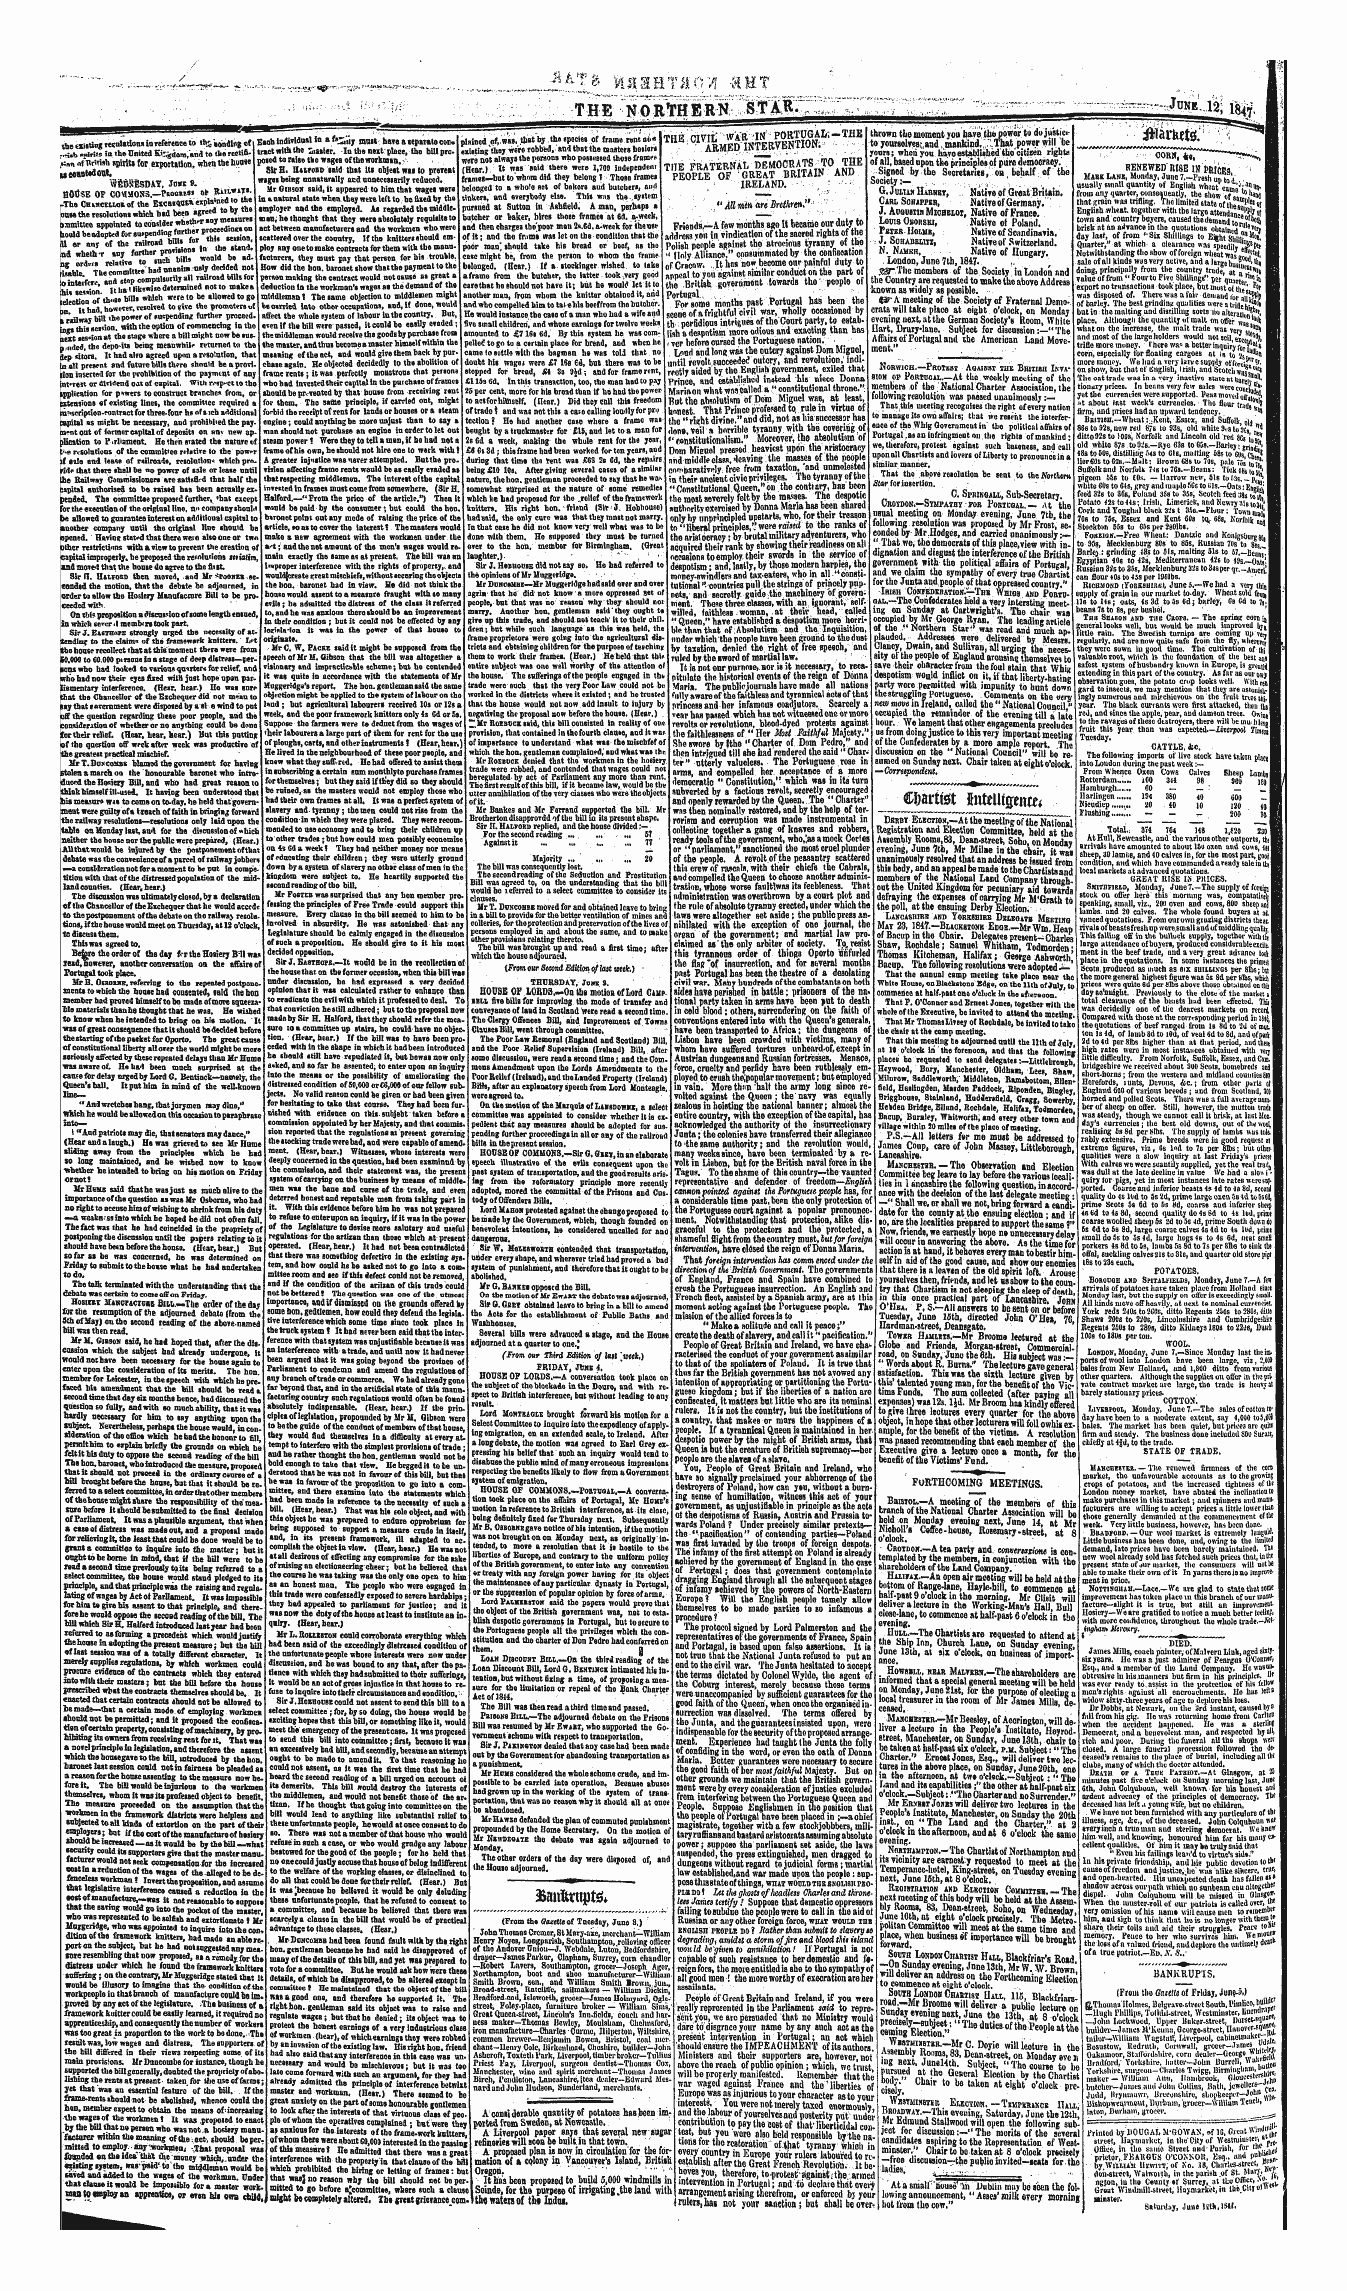 Northern Star (1837-1852): jS F Y, 1st edition - Cjjatttsit Inttufgtncr*